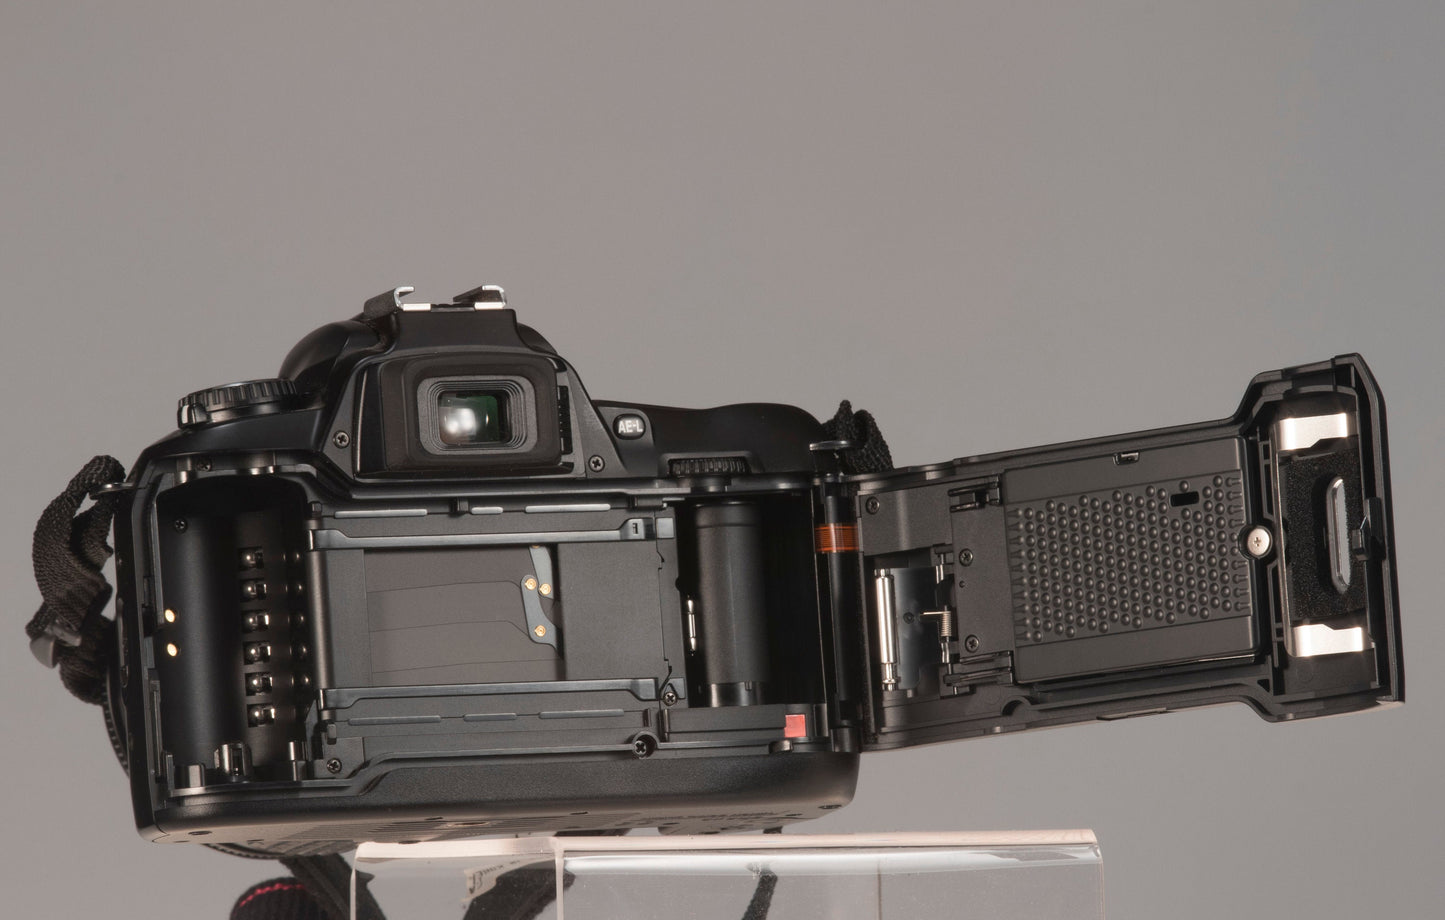 Nikon F75 (aka N75) 35mm film SLR